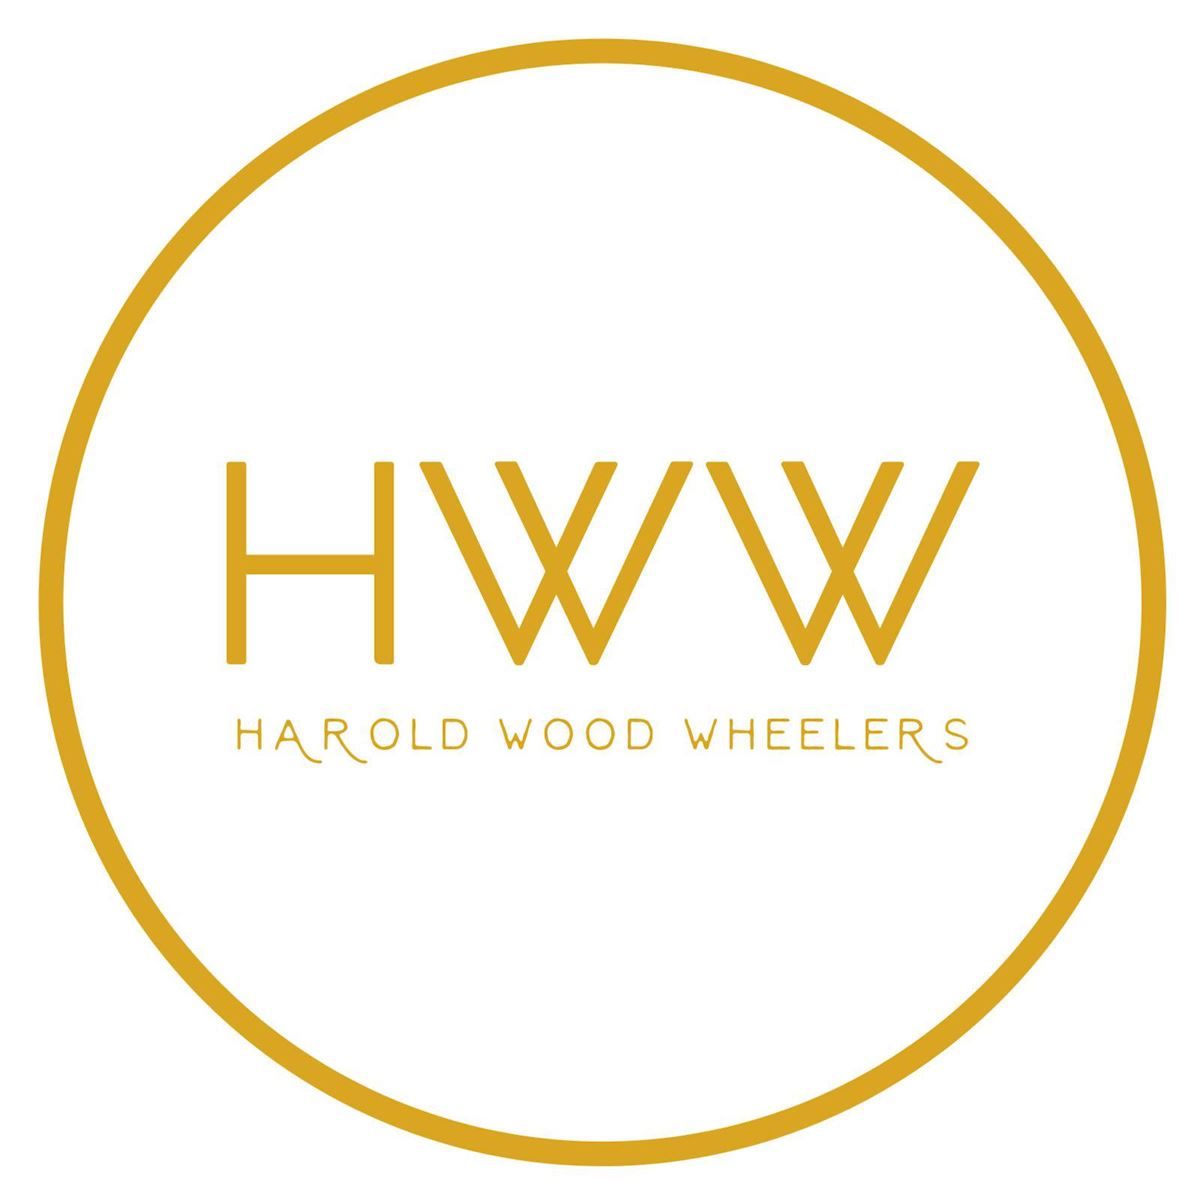 Harold Wood Wheelers